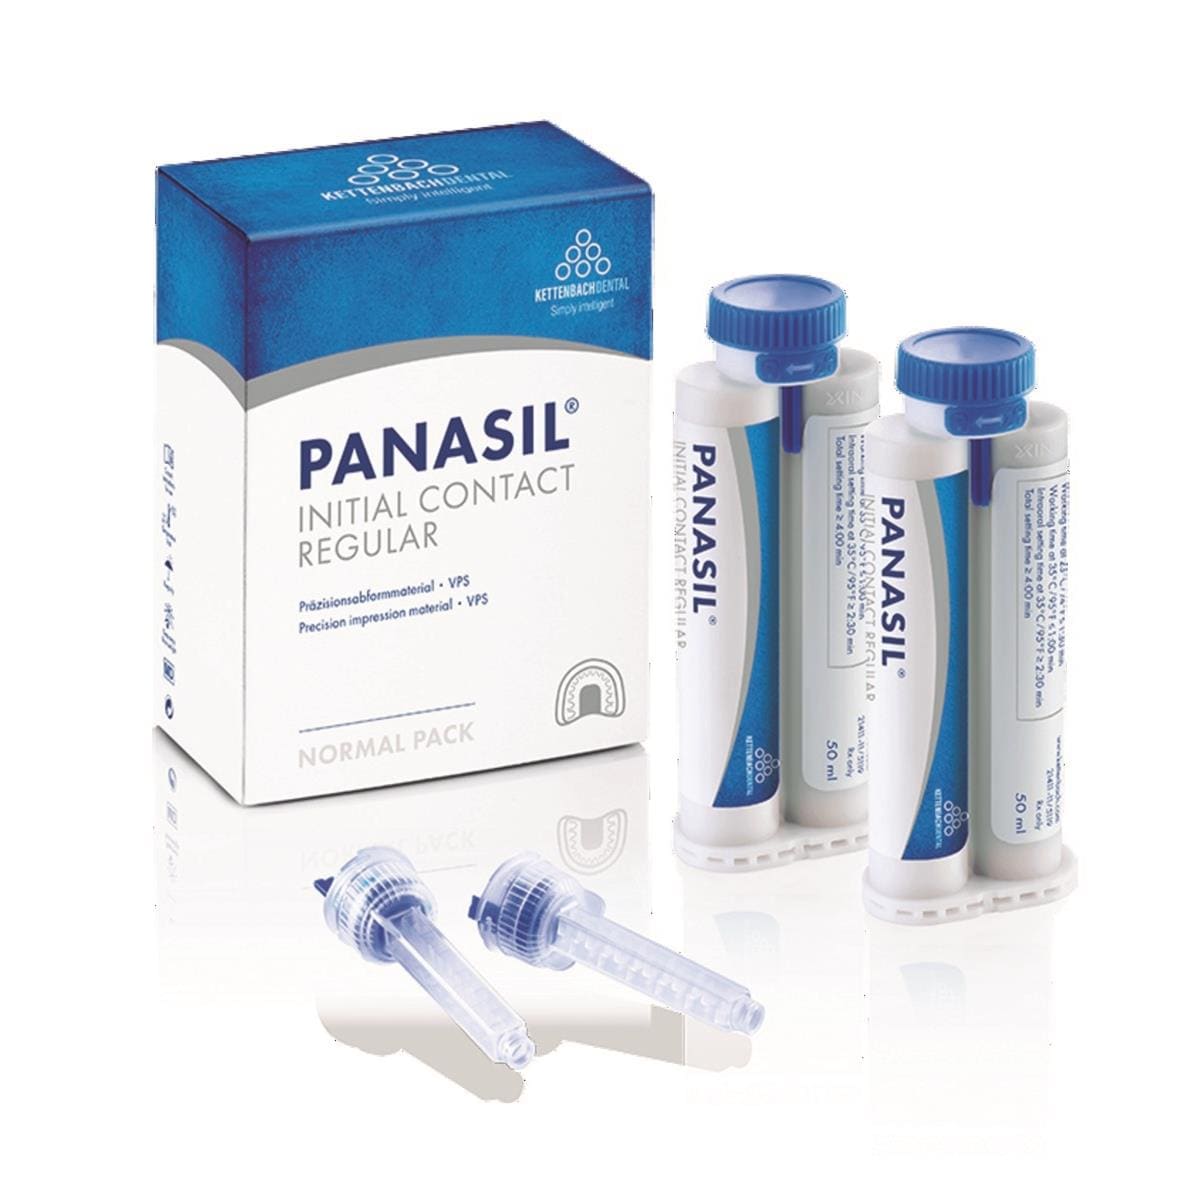 Panasil Initial Contact - Regular - 2 x 50ml - KETTENBACH